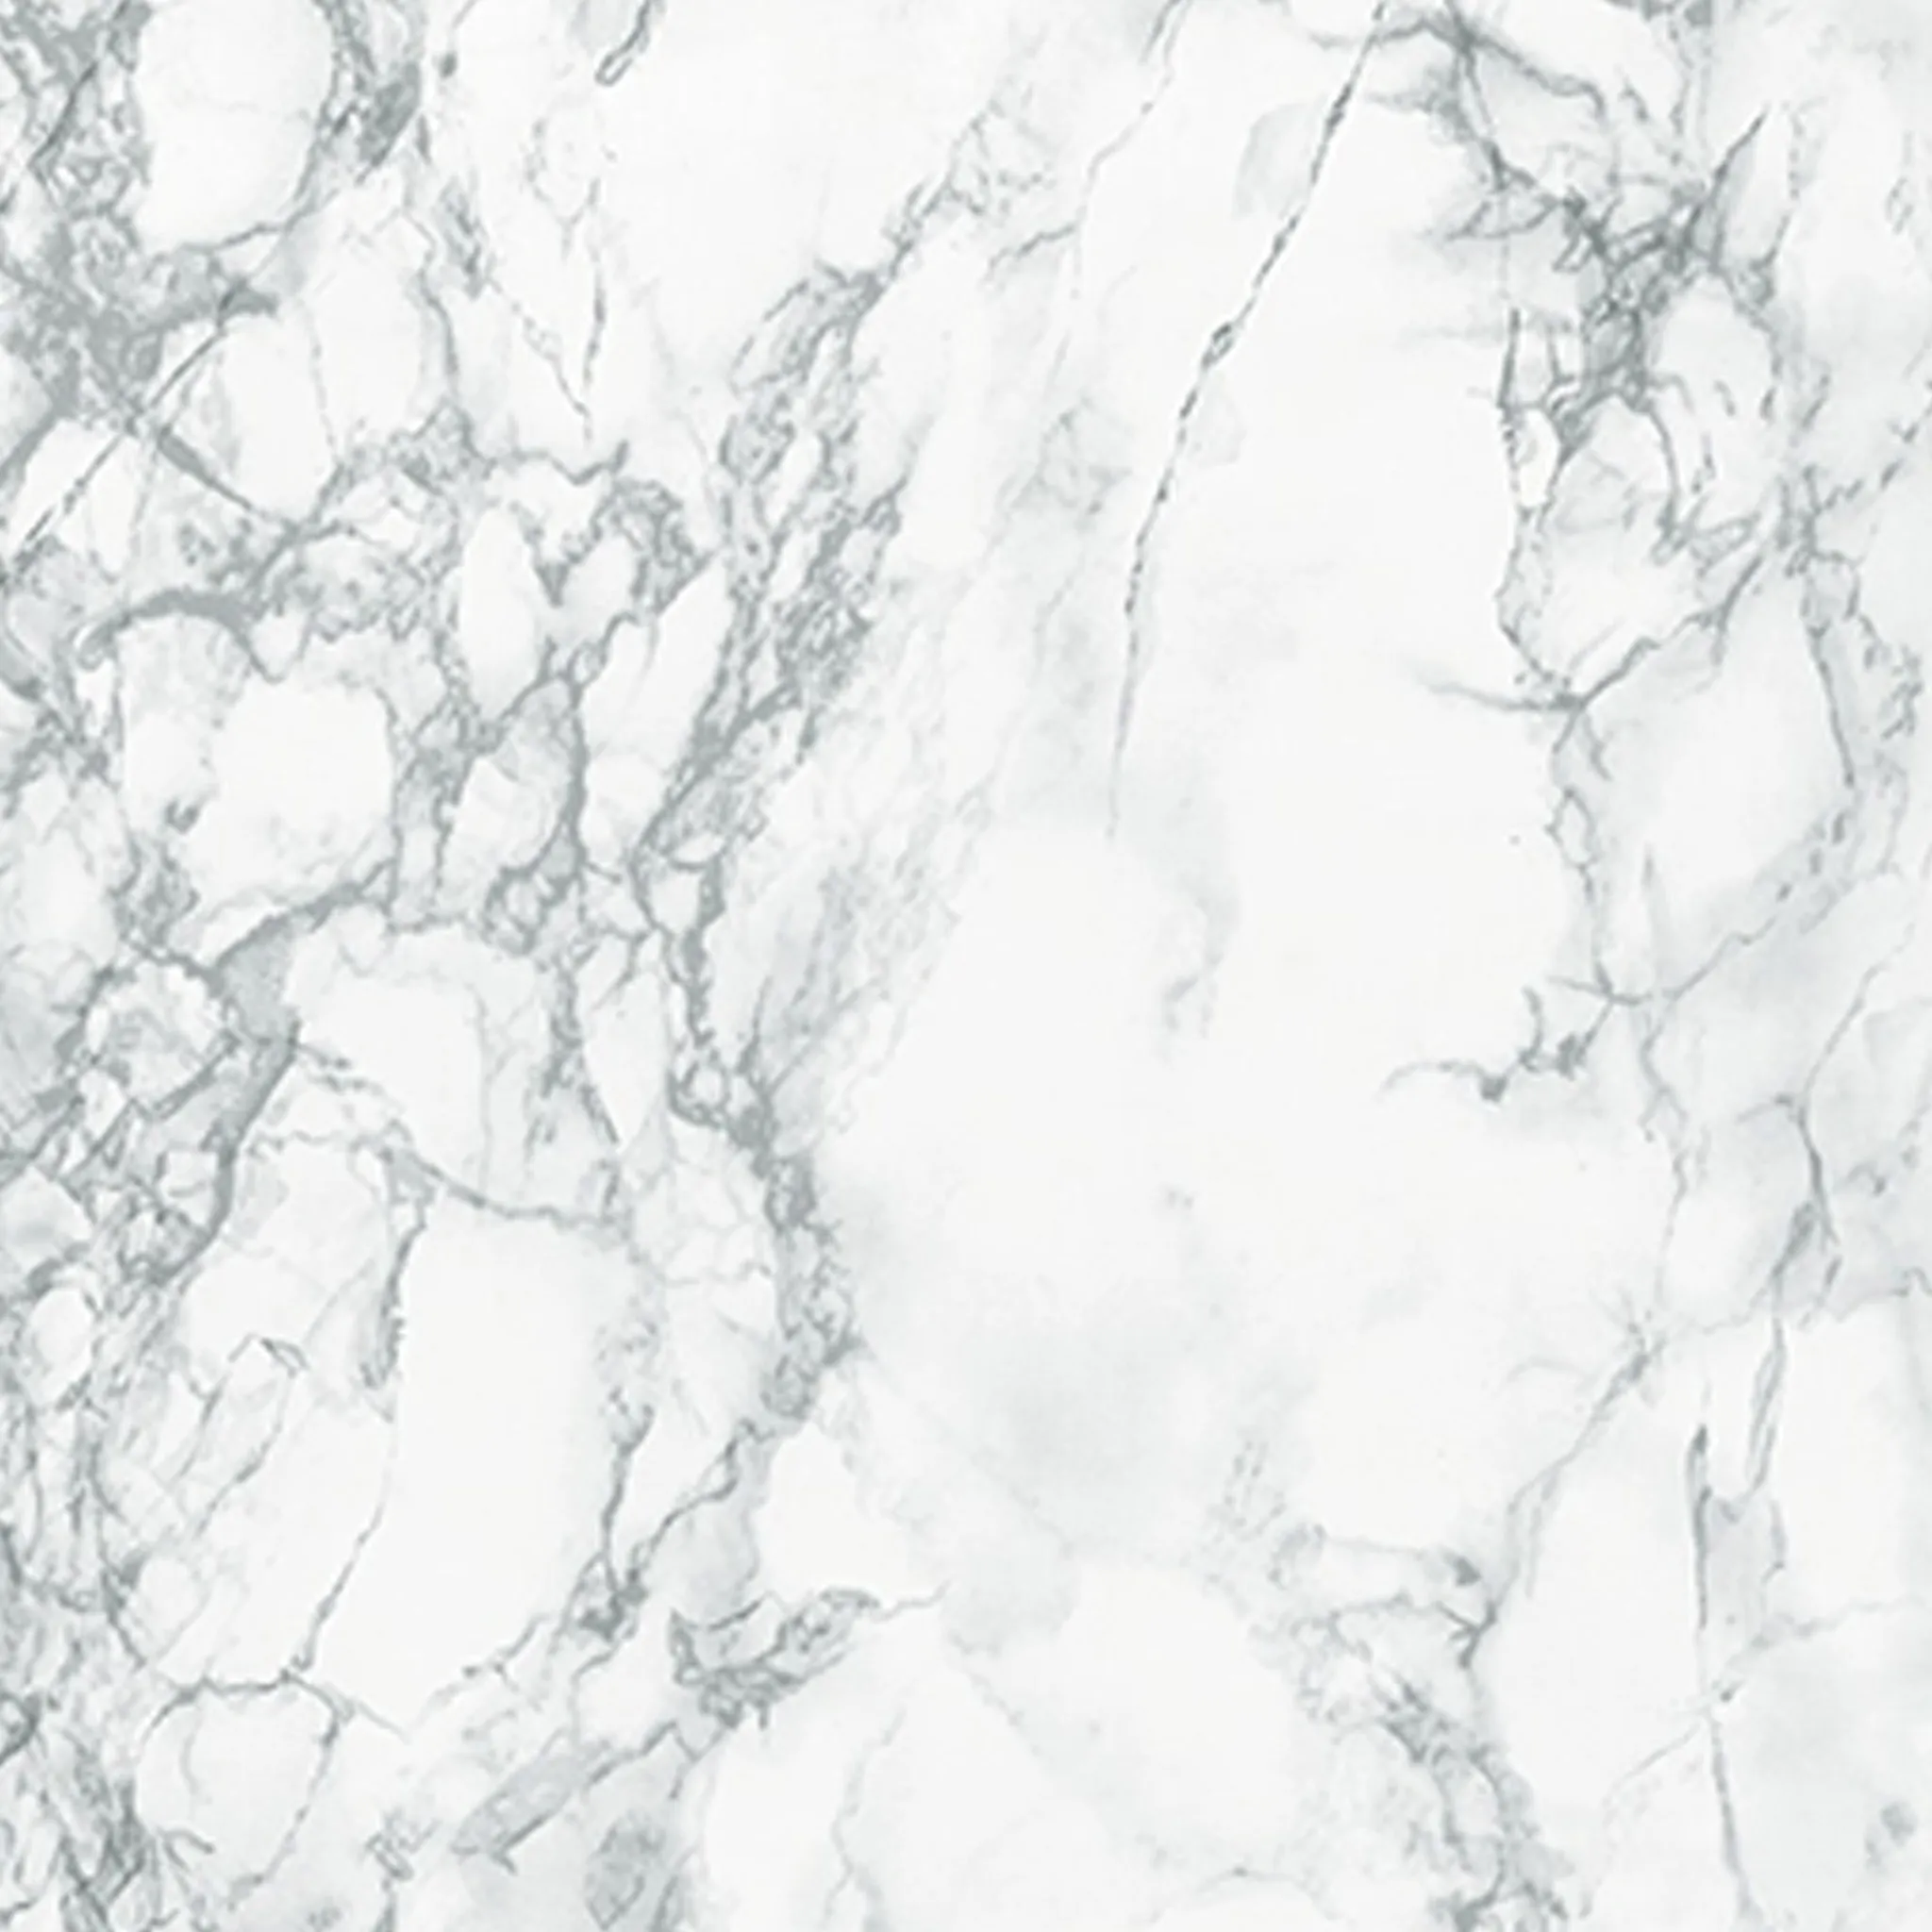 Klebefolie Selbstklende Folie Carrara Grau dcfix Marmor Granit Steinoptik Tapete 